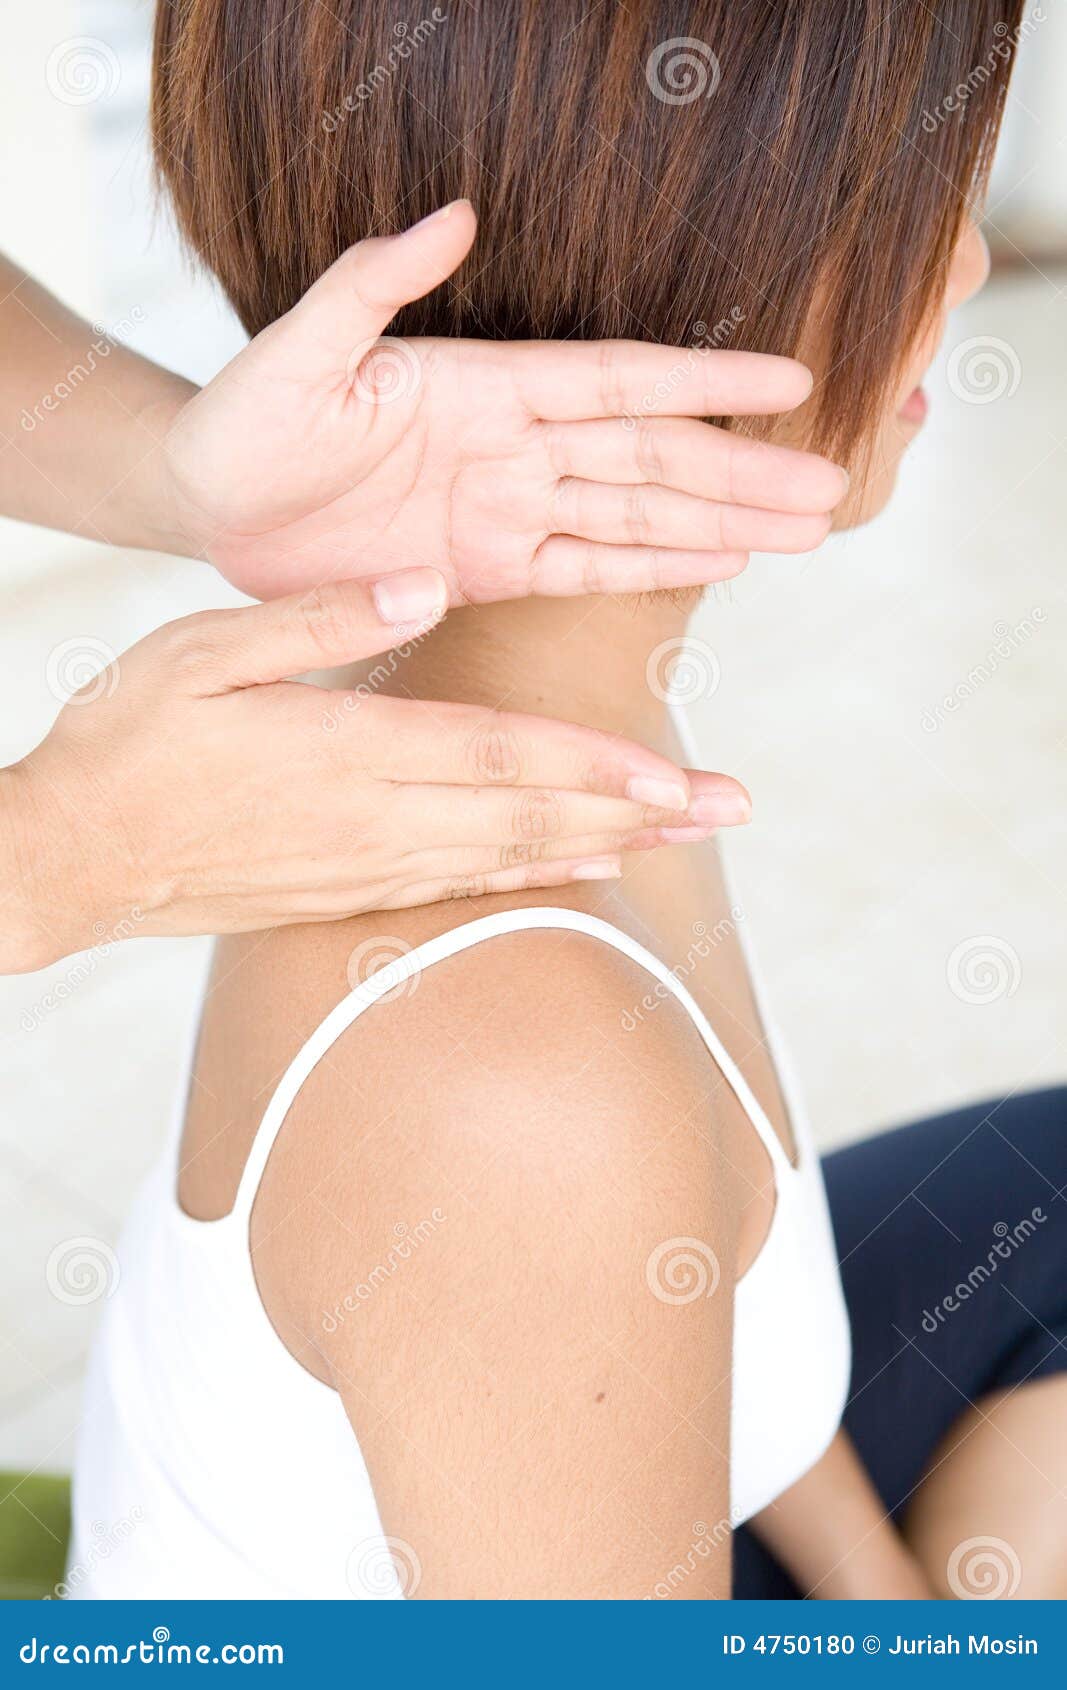 https://thumbs.dreamstime.com/z/woman-getting-shoulder-massage-4750180.jpg